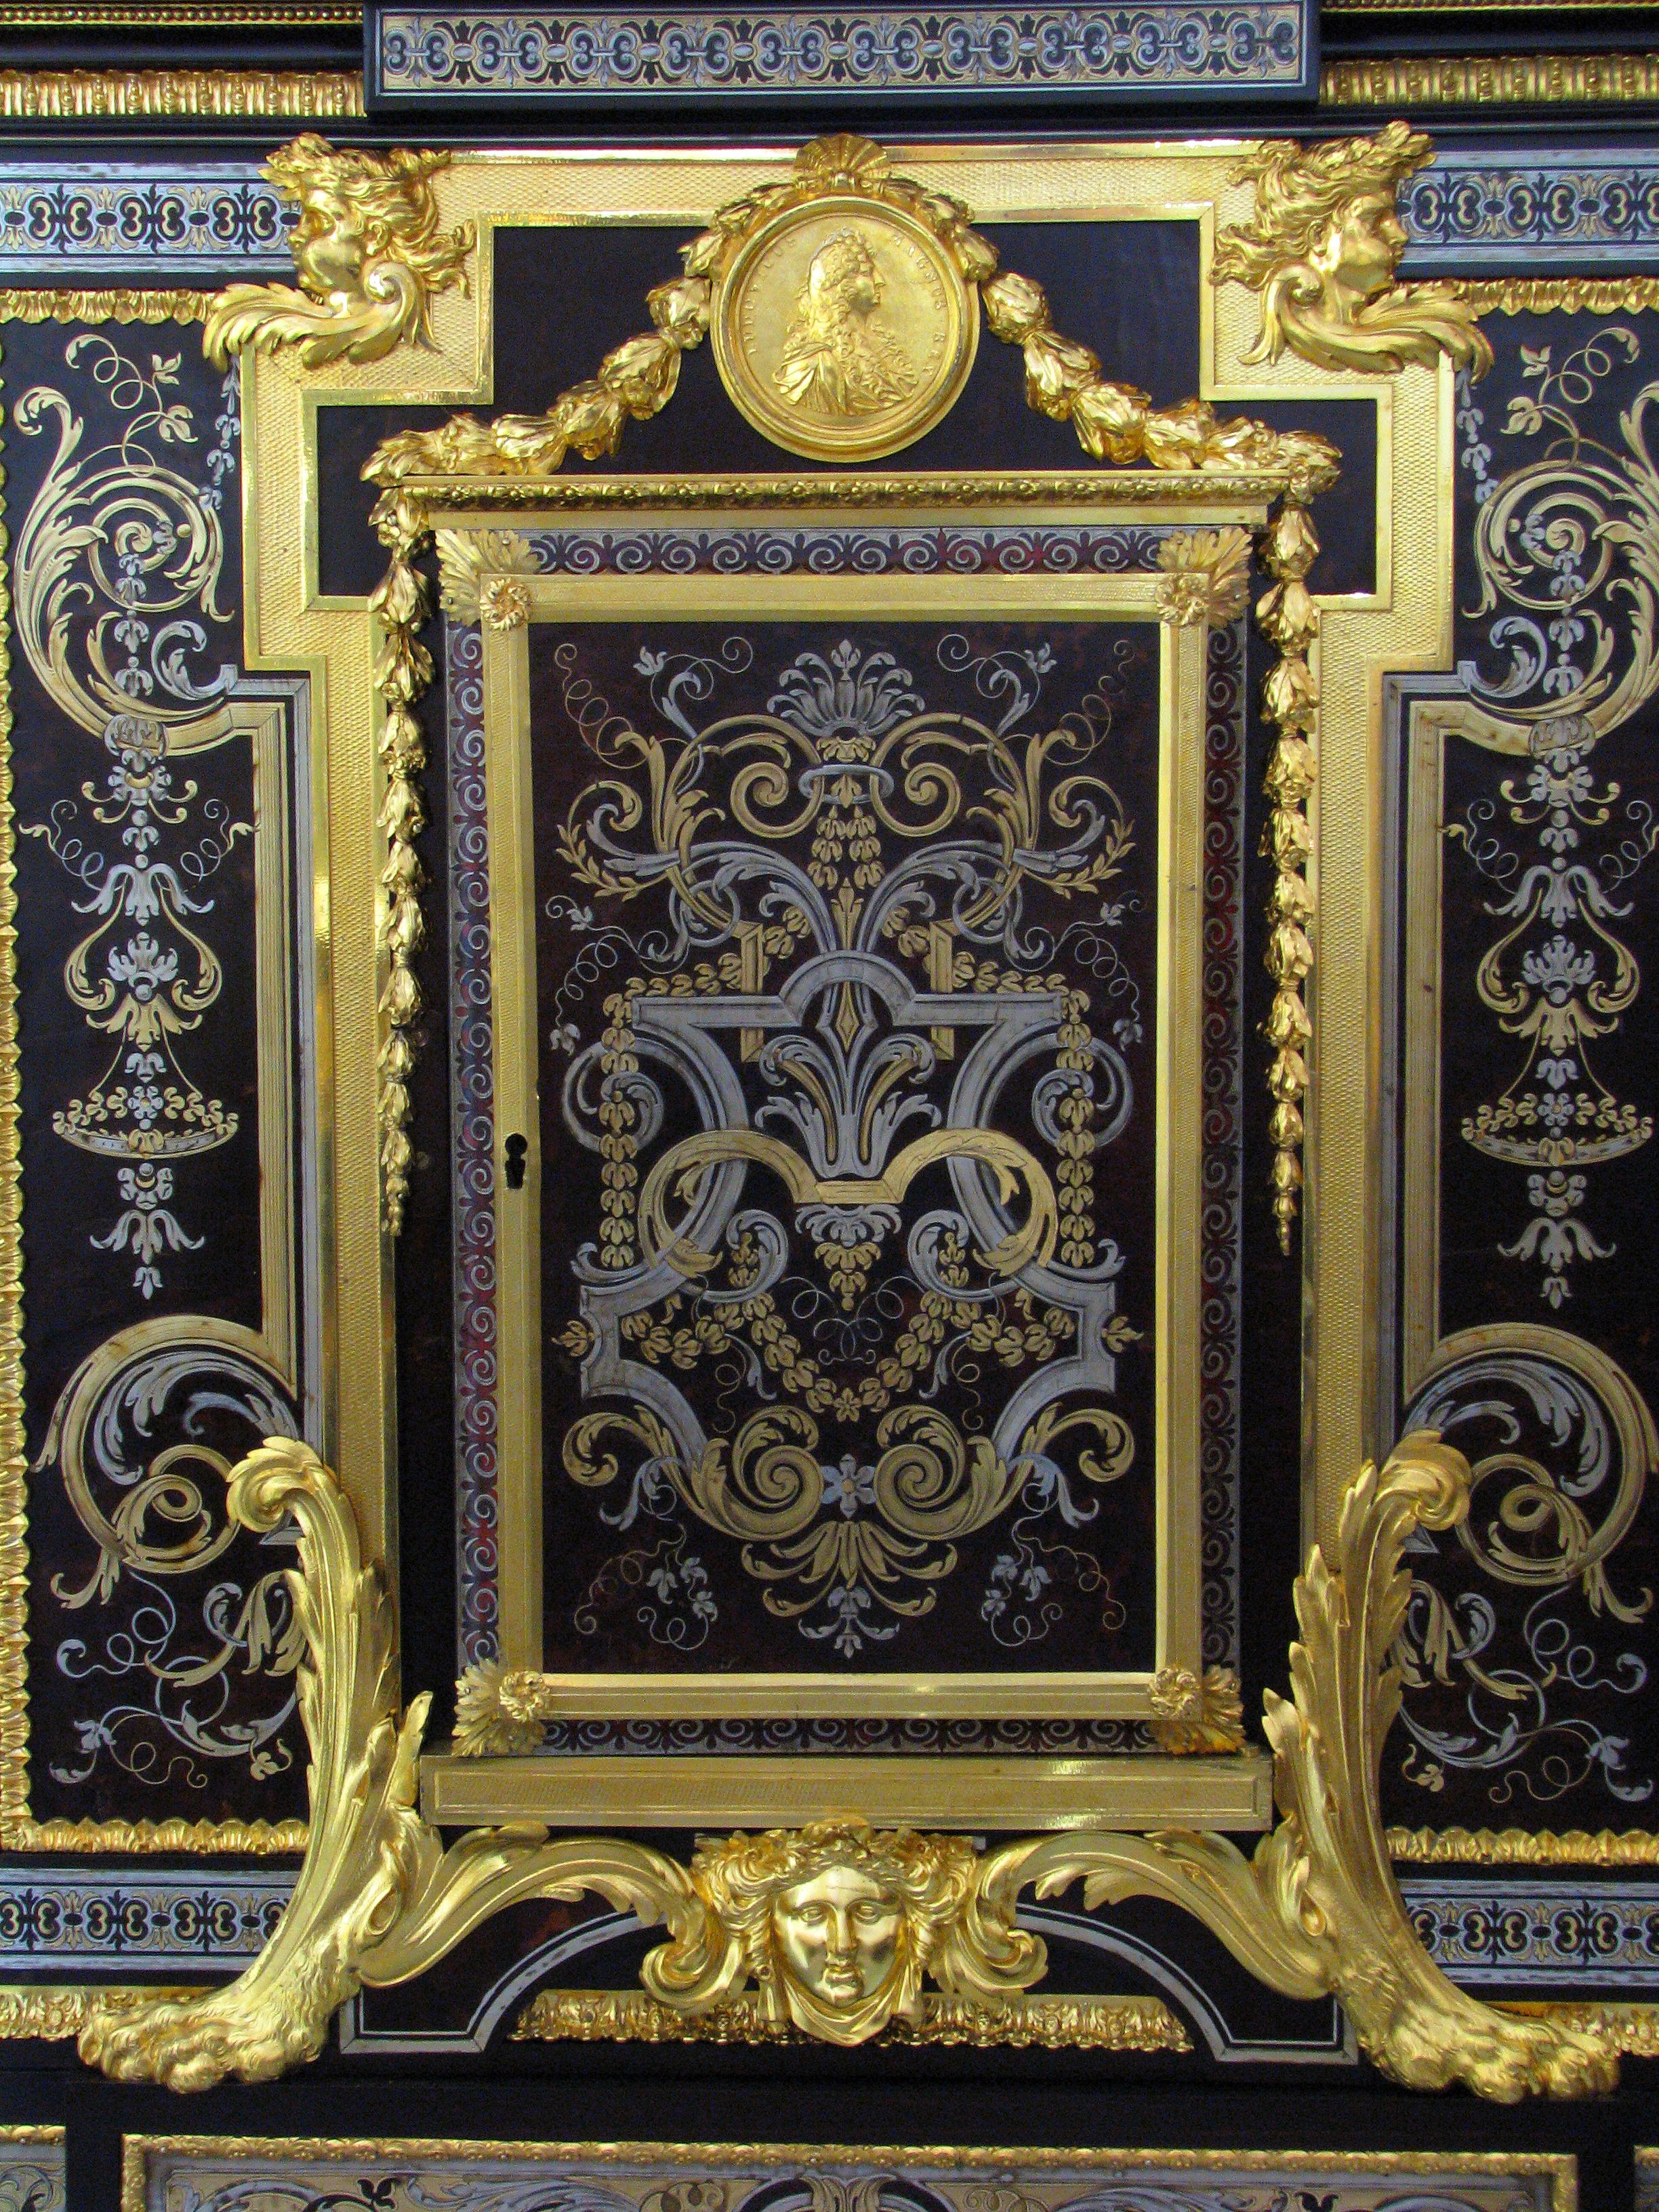 Doré Cabinet en marqueterie de bronze doré de style Boulle, époque Napoléon III, Winckelsen en vente